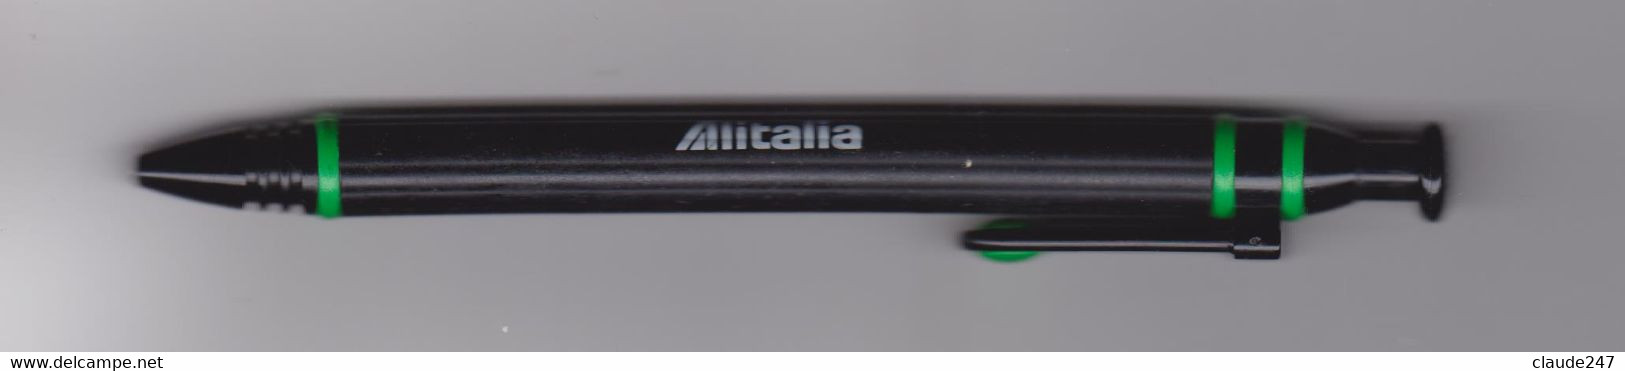 Alitalia Penna Biro Anni 1980/1990 - Giveaways